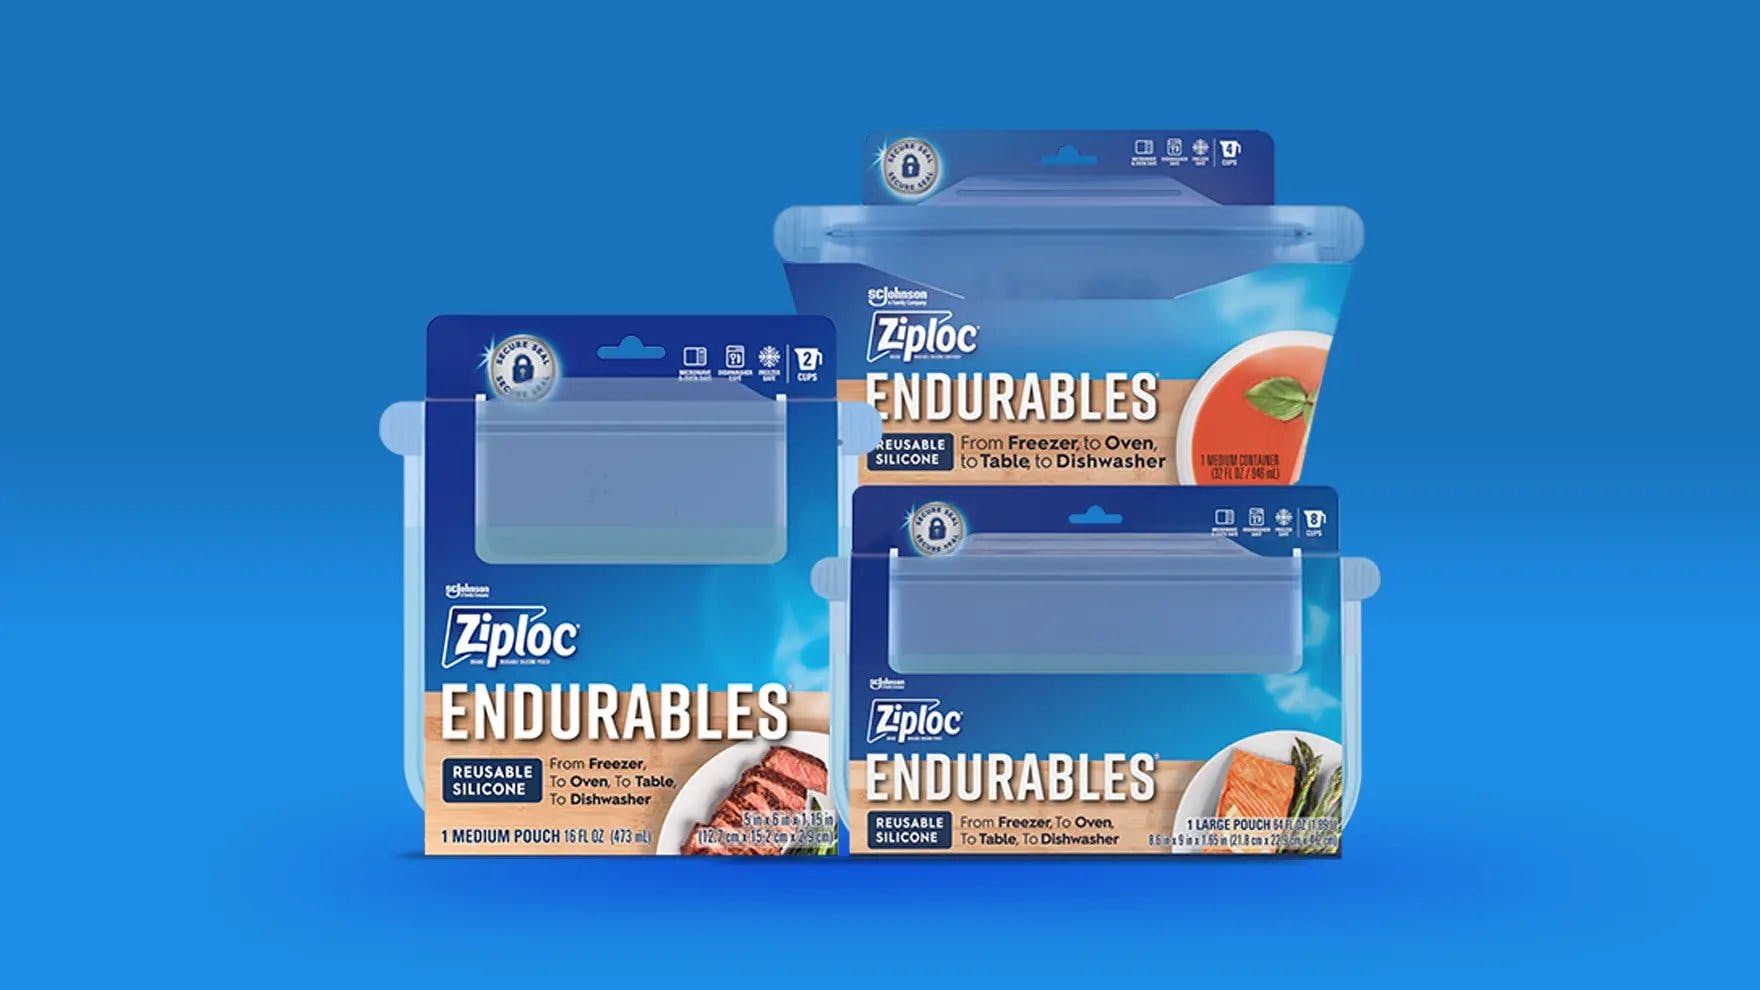 Ziploc Endurables Containers